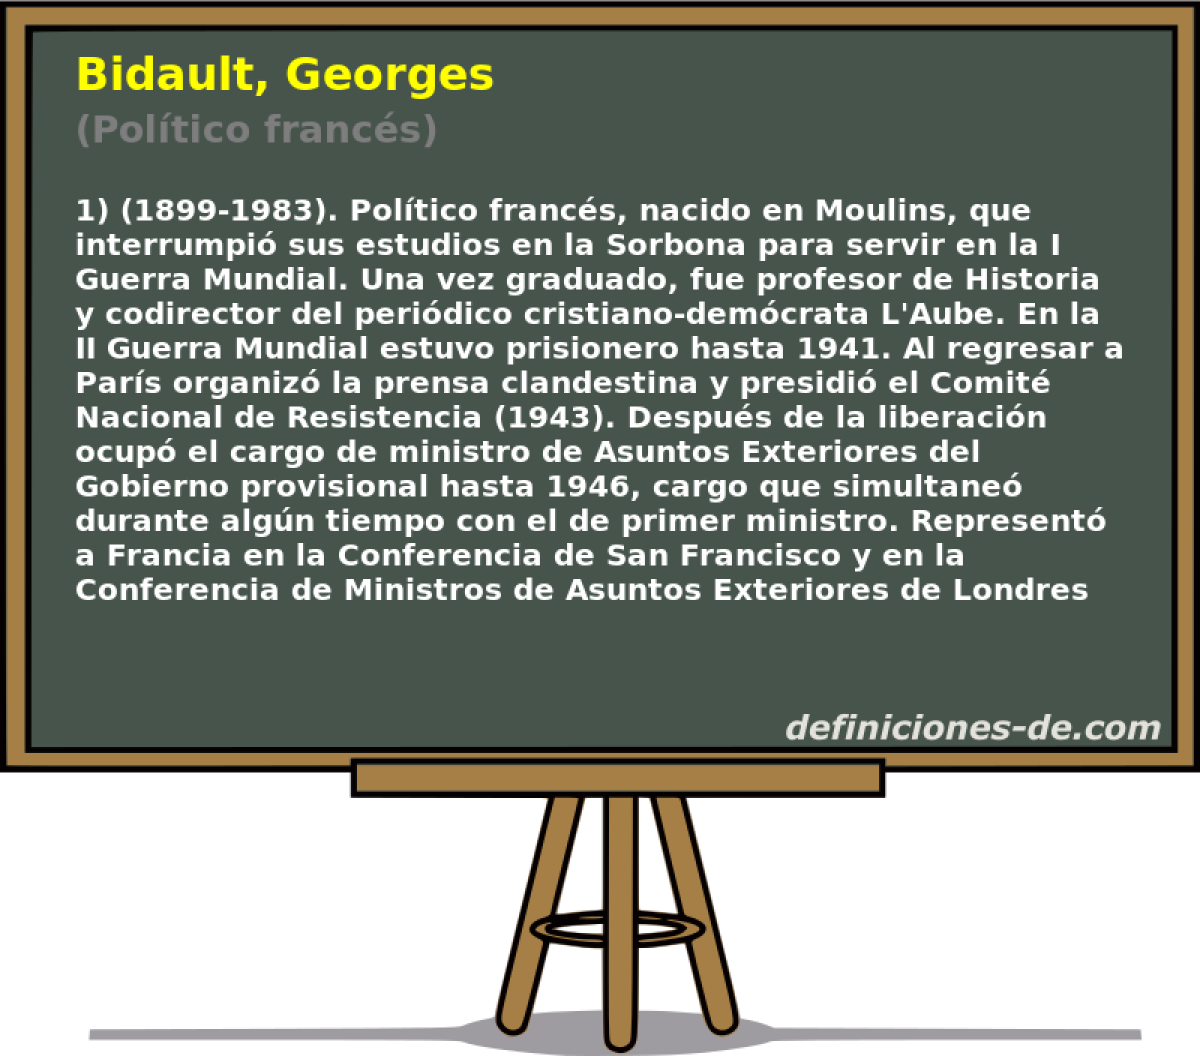 Bidault, Georges (Poltico francs)